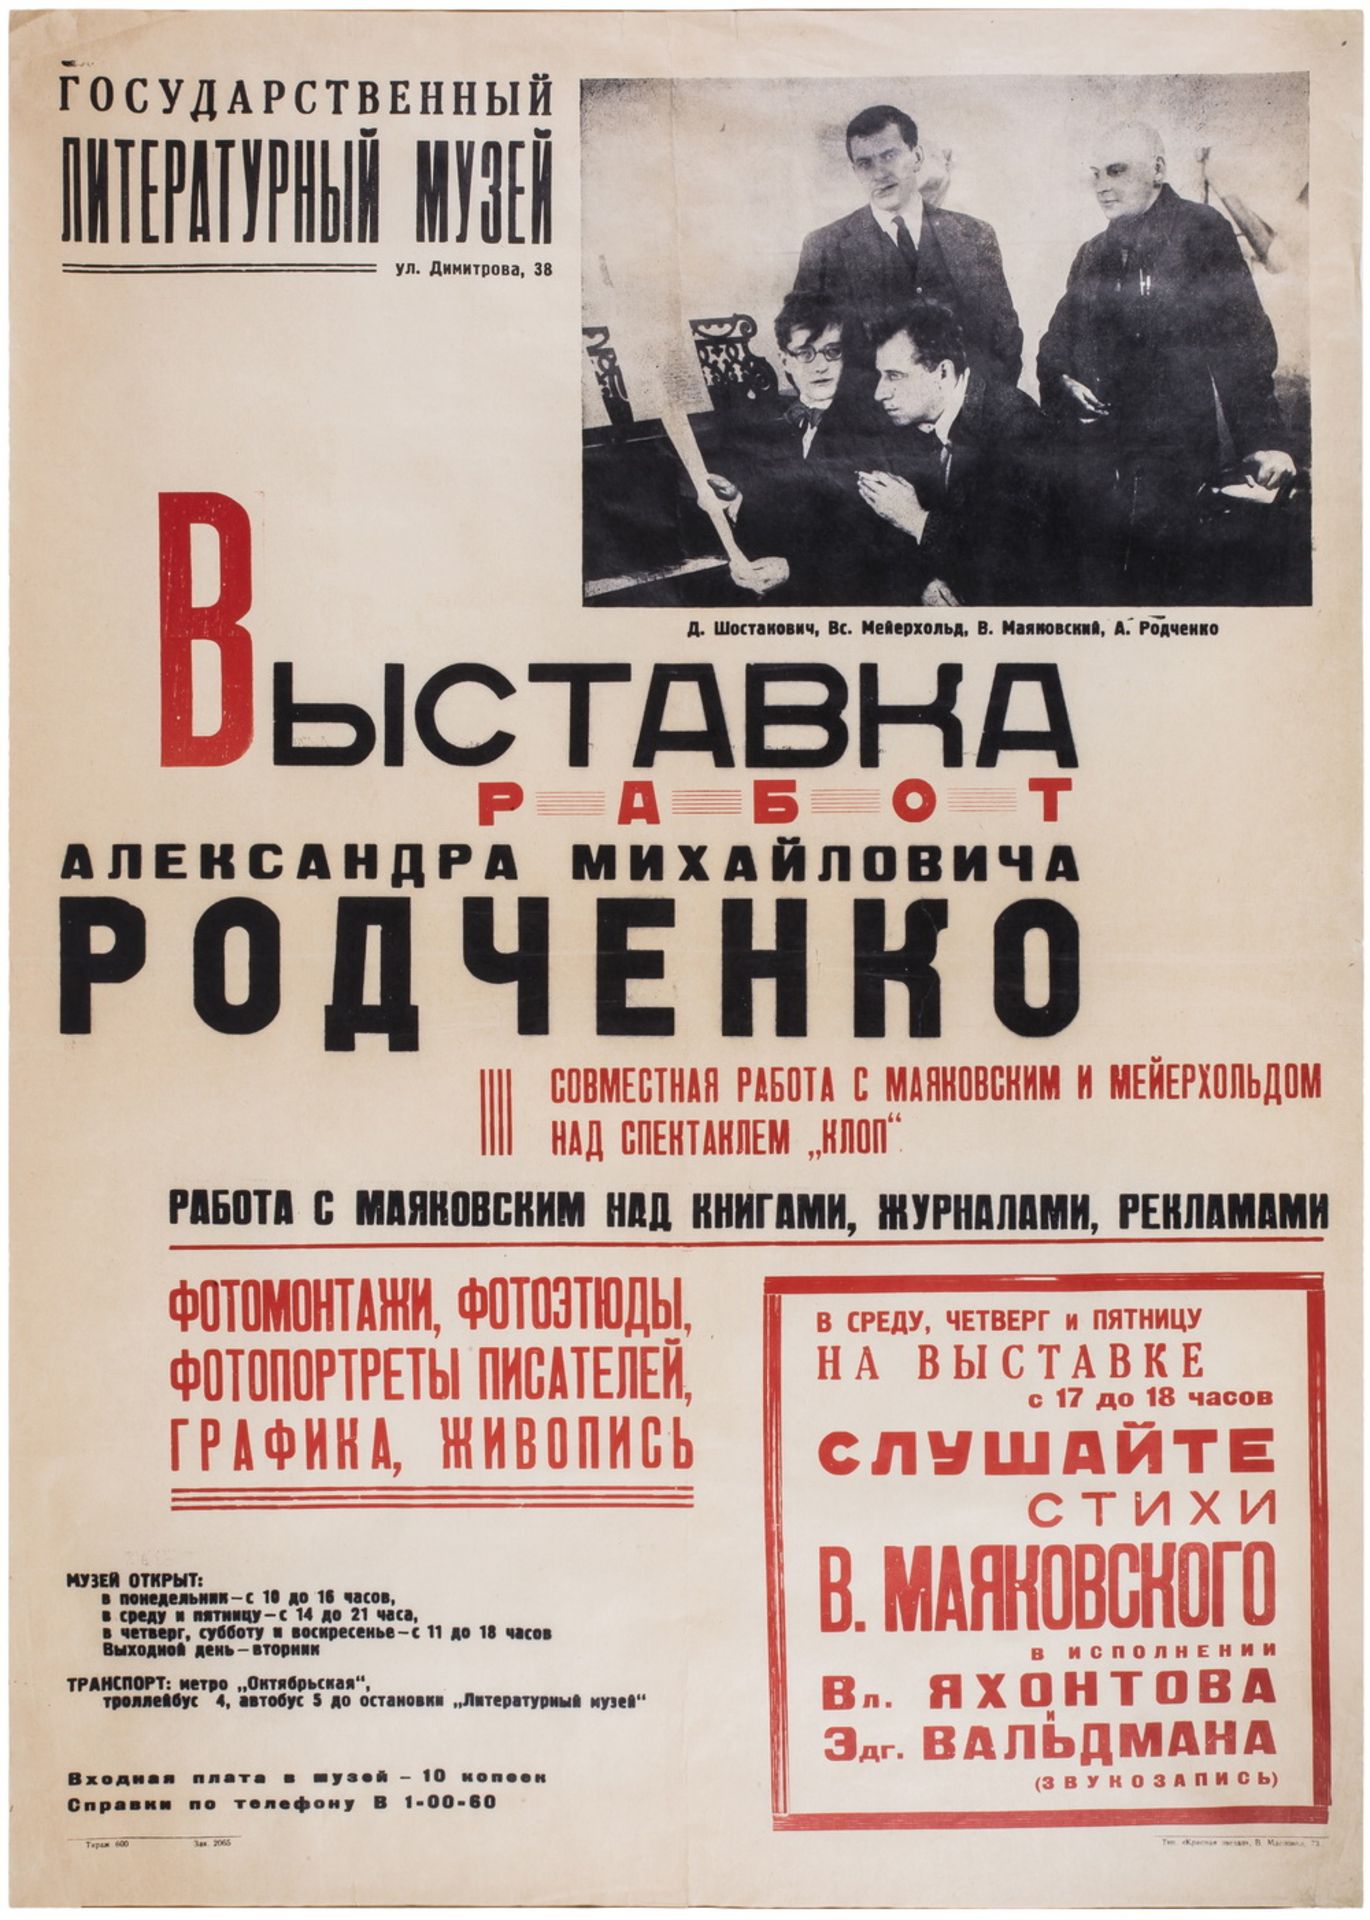 [Rodchenko, A. One of 600 copies. Soviet art]. Poster of Aleksandr Rodchenko's Exhibition. Collabora